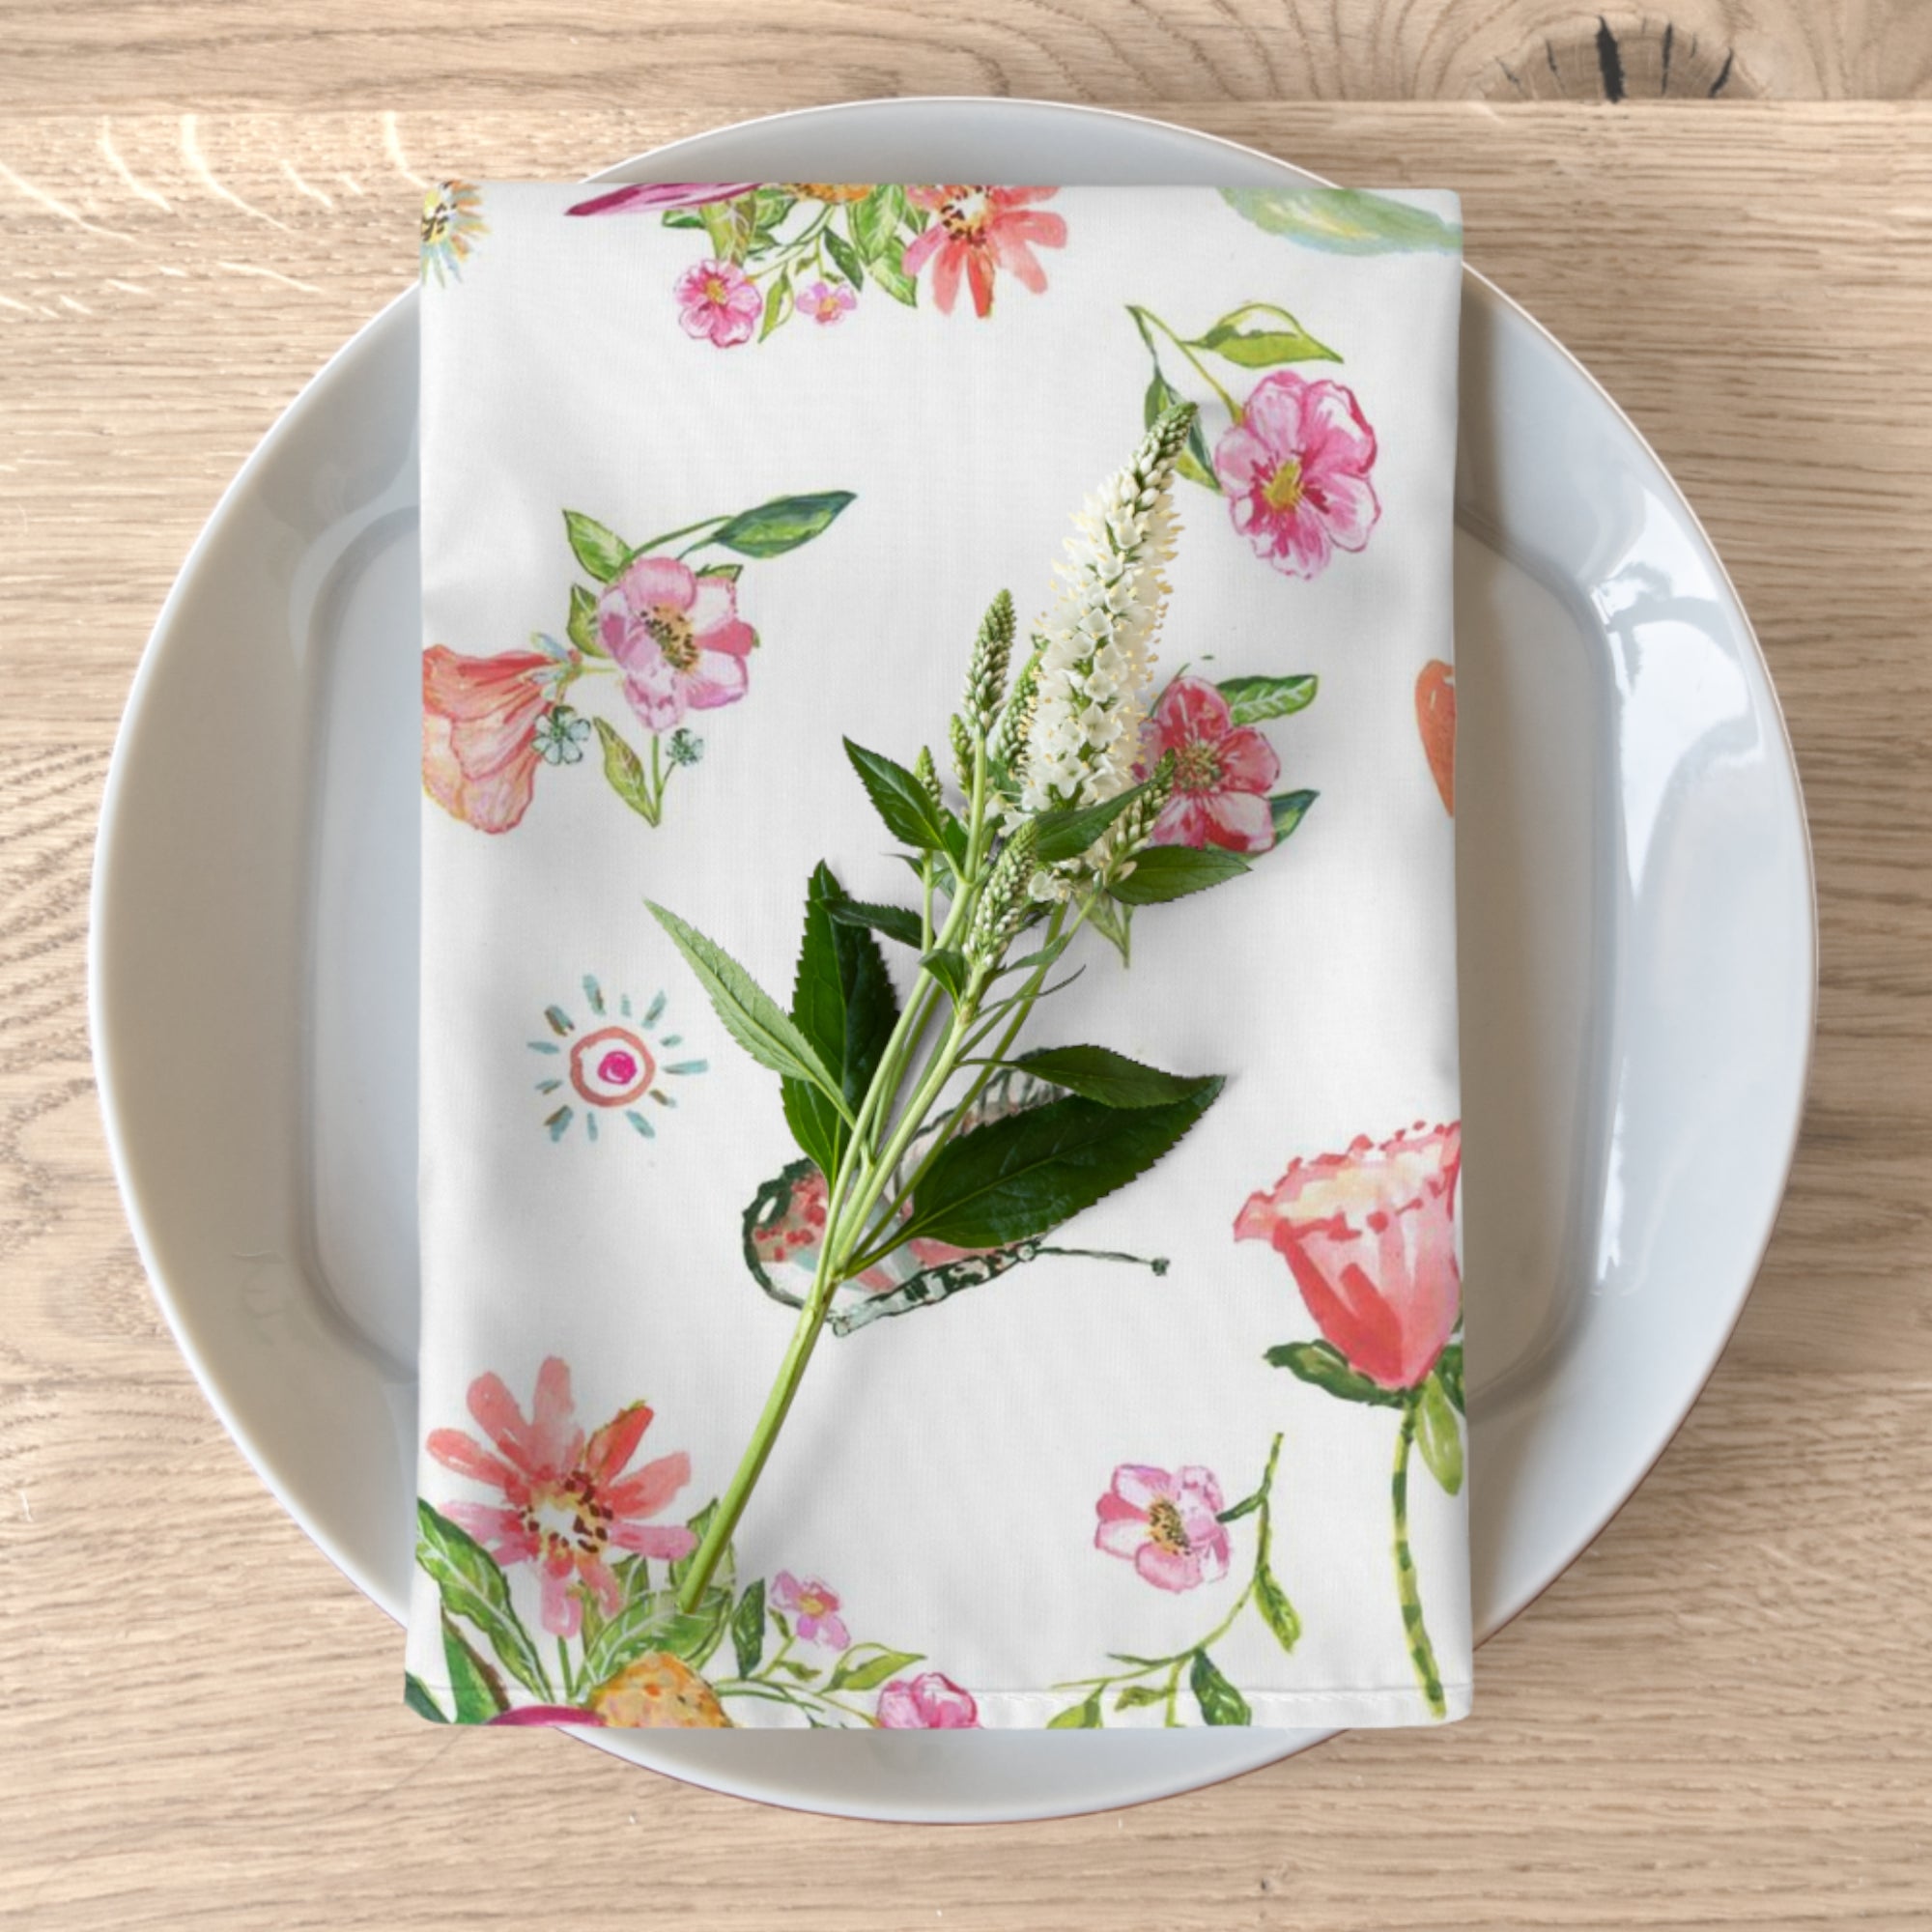 Set of Four Floral Napkins | Spring Napkin Set | Table Accessories | Table Decor